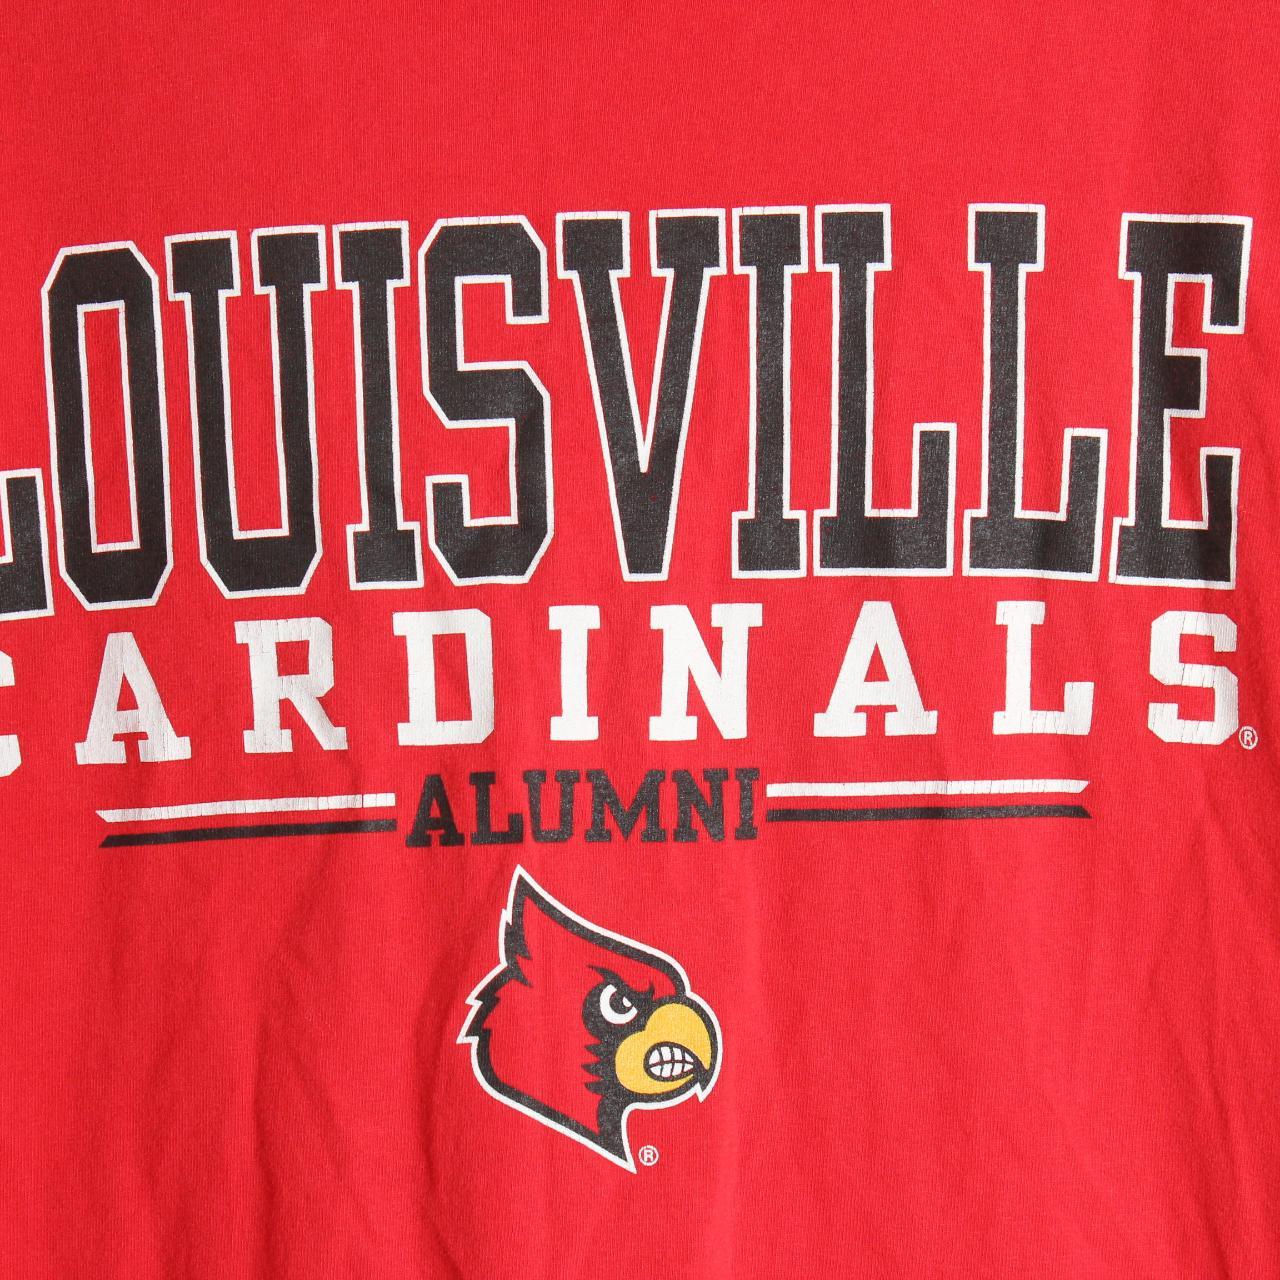 Vintage University of Louisville Alumni Sweatshirt - Depop